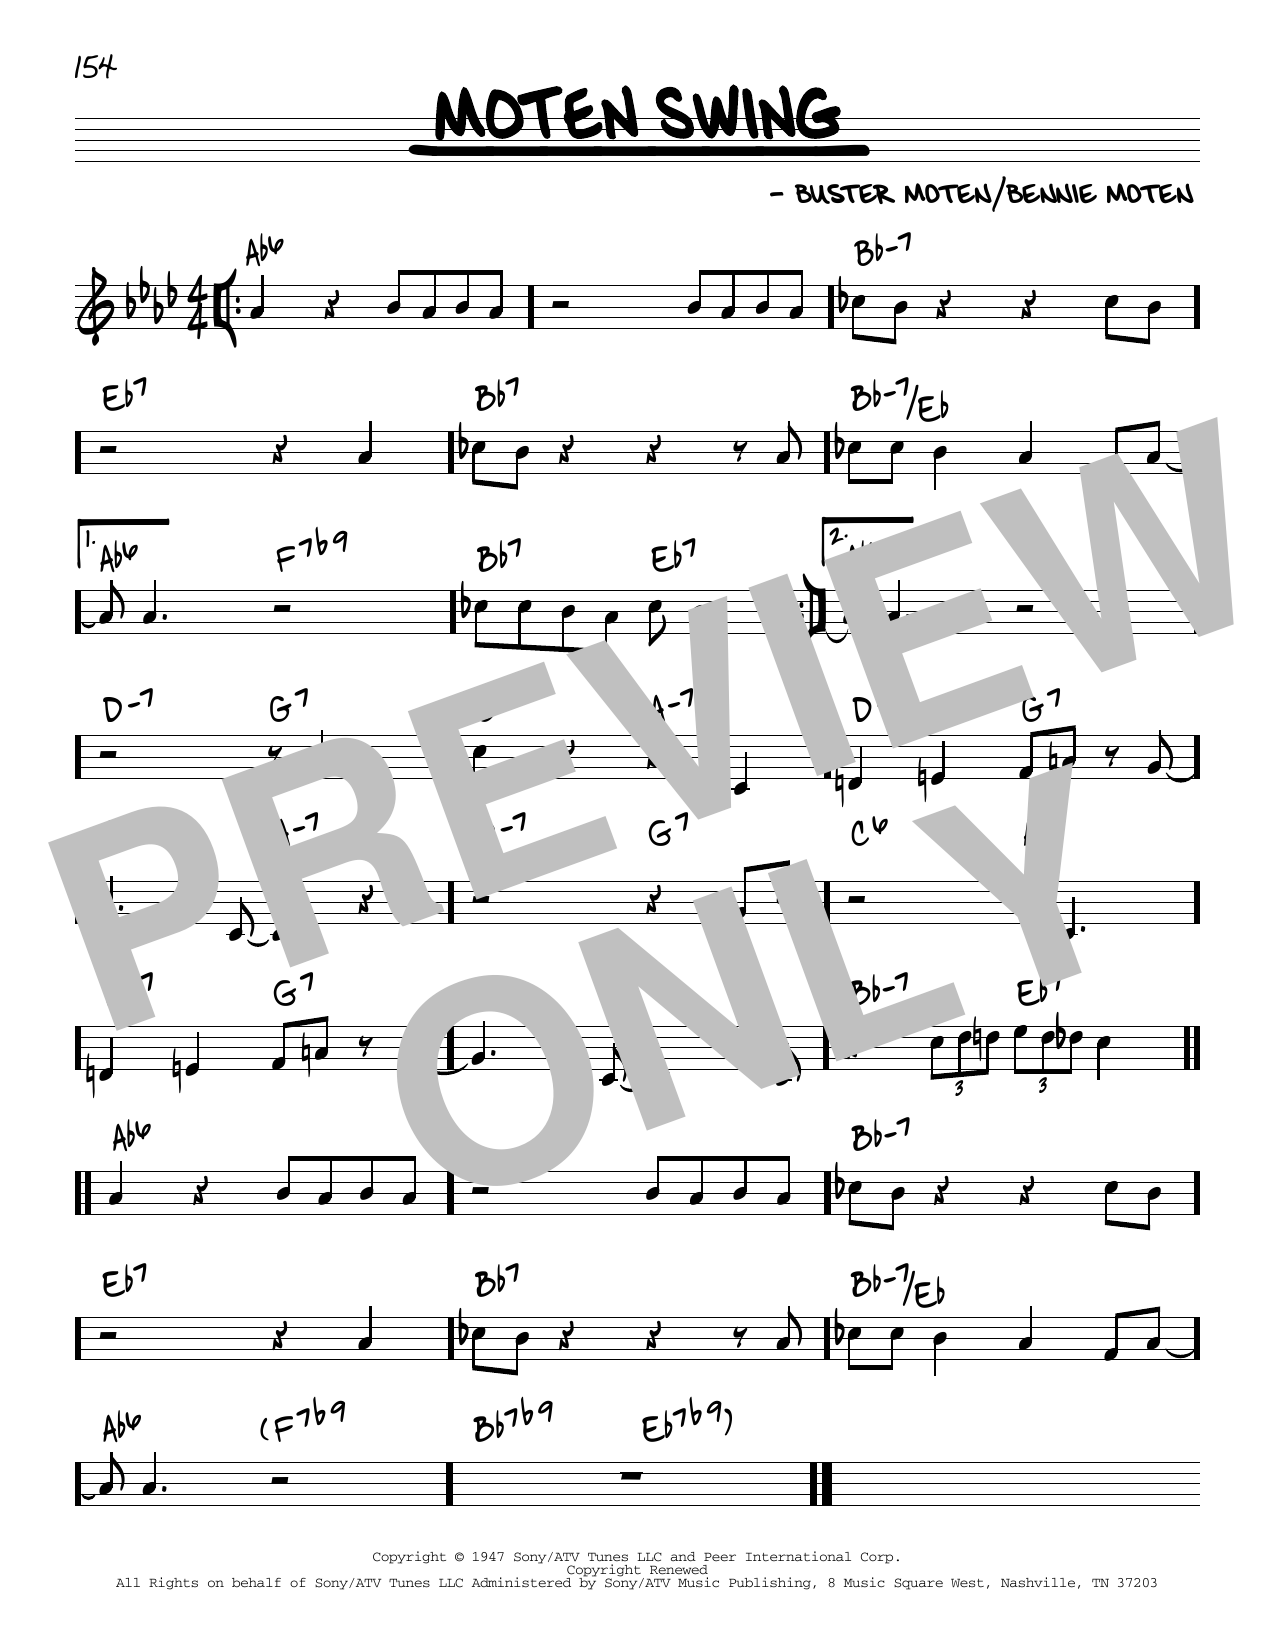 Bennie Moten Moten Swing Sheet Music Notes & Chords for Piano - Download or Print PDF